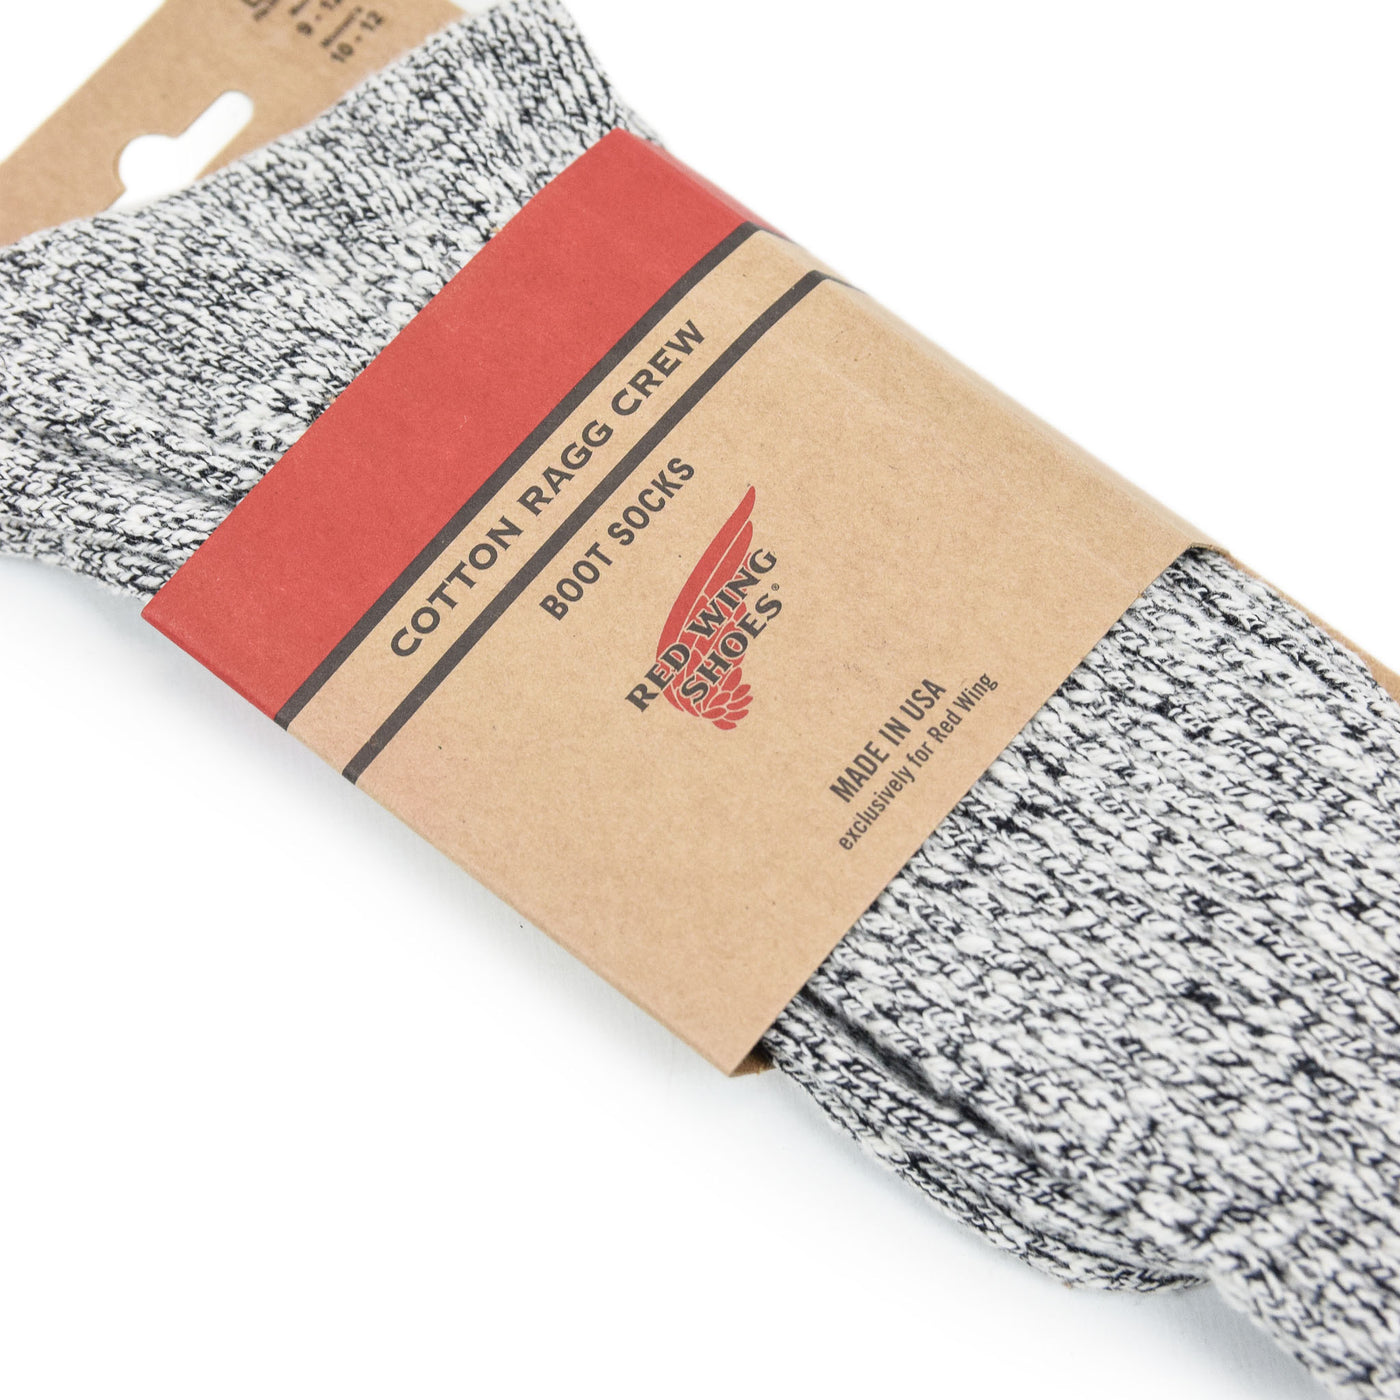 Red Wing Cotton Ragg Socks Black / White packaging